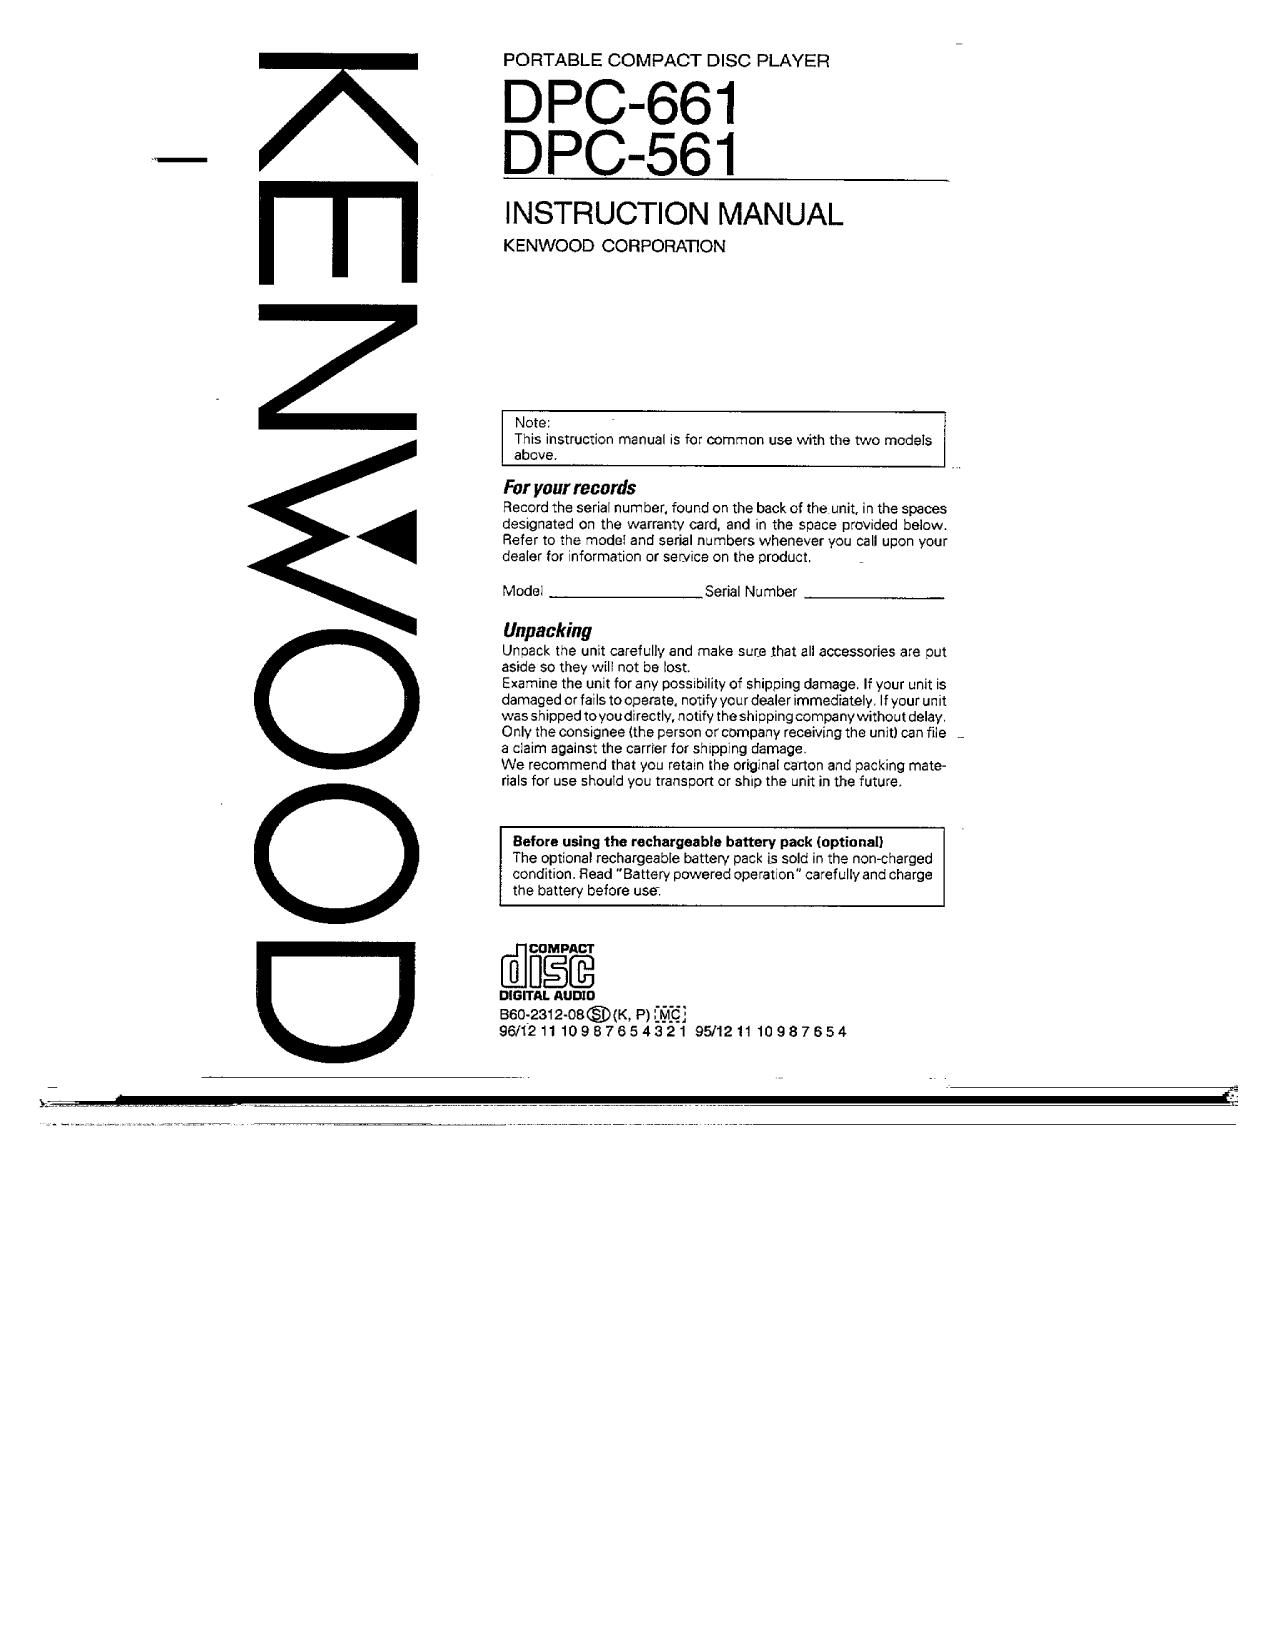 Kenwood DPC 561 Owners Manual